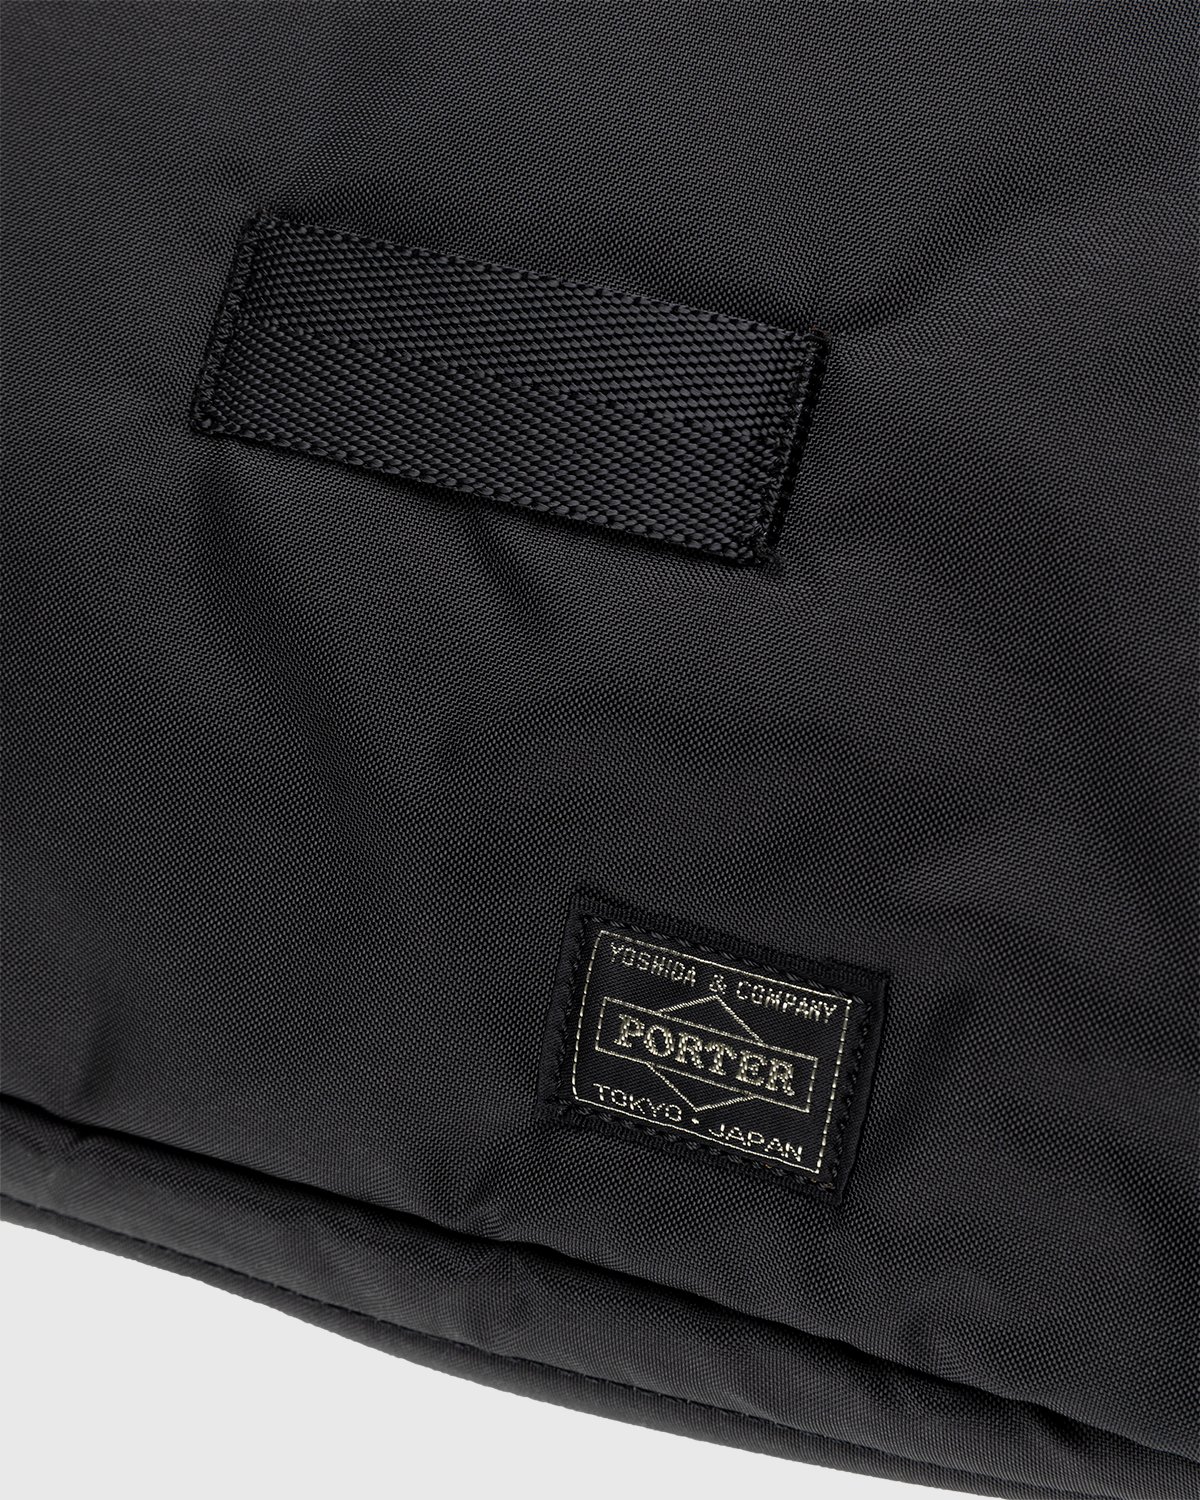 Porter-Yoshida & Co. - 2-Way Tote Bag Black - Accessories - Black - Image 6